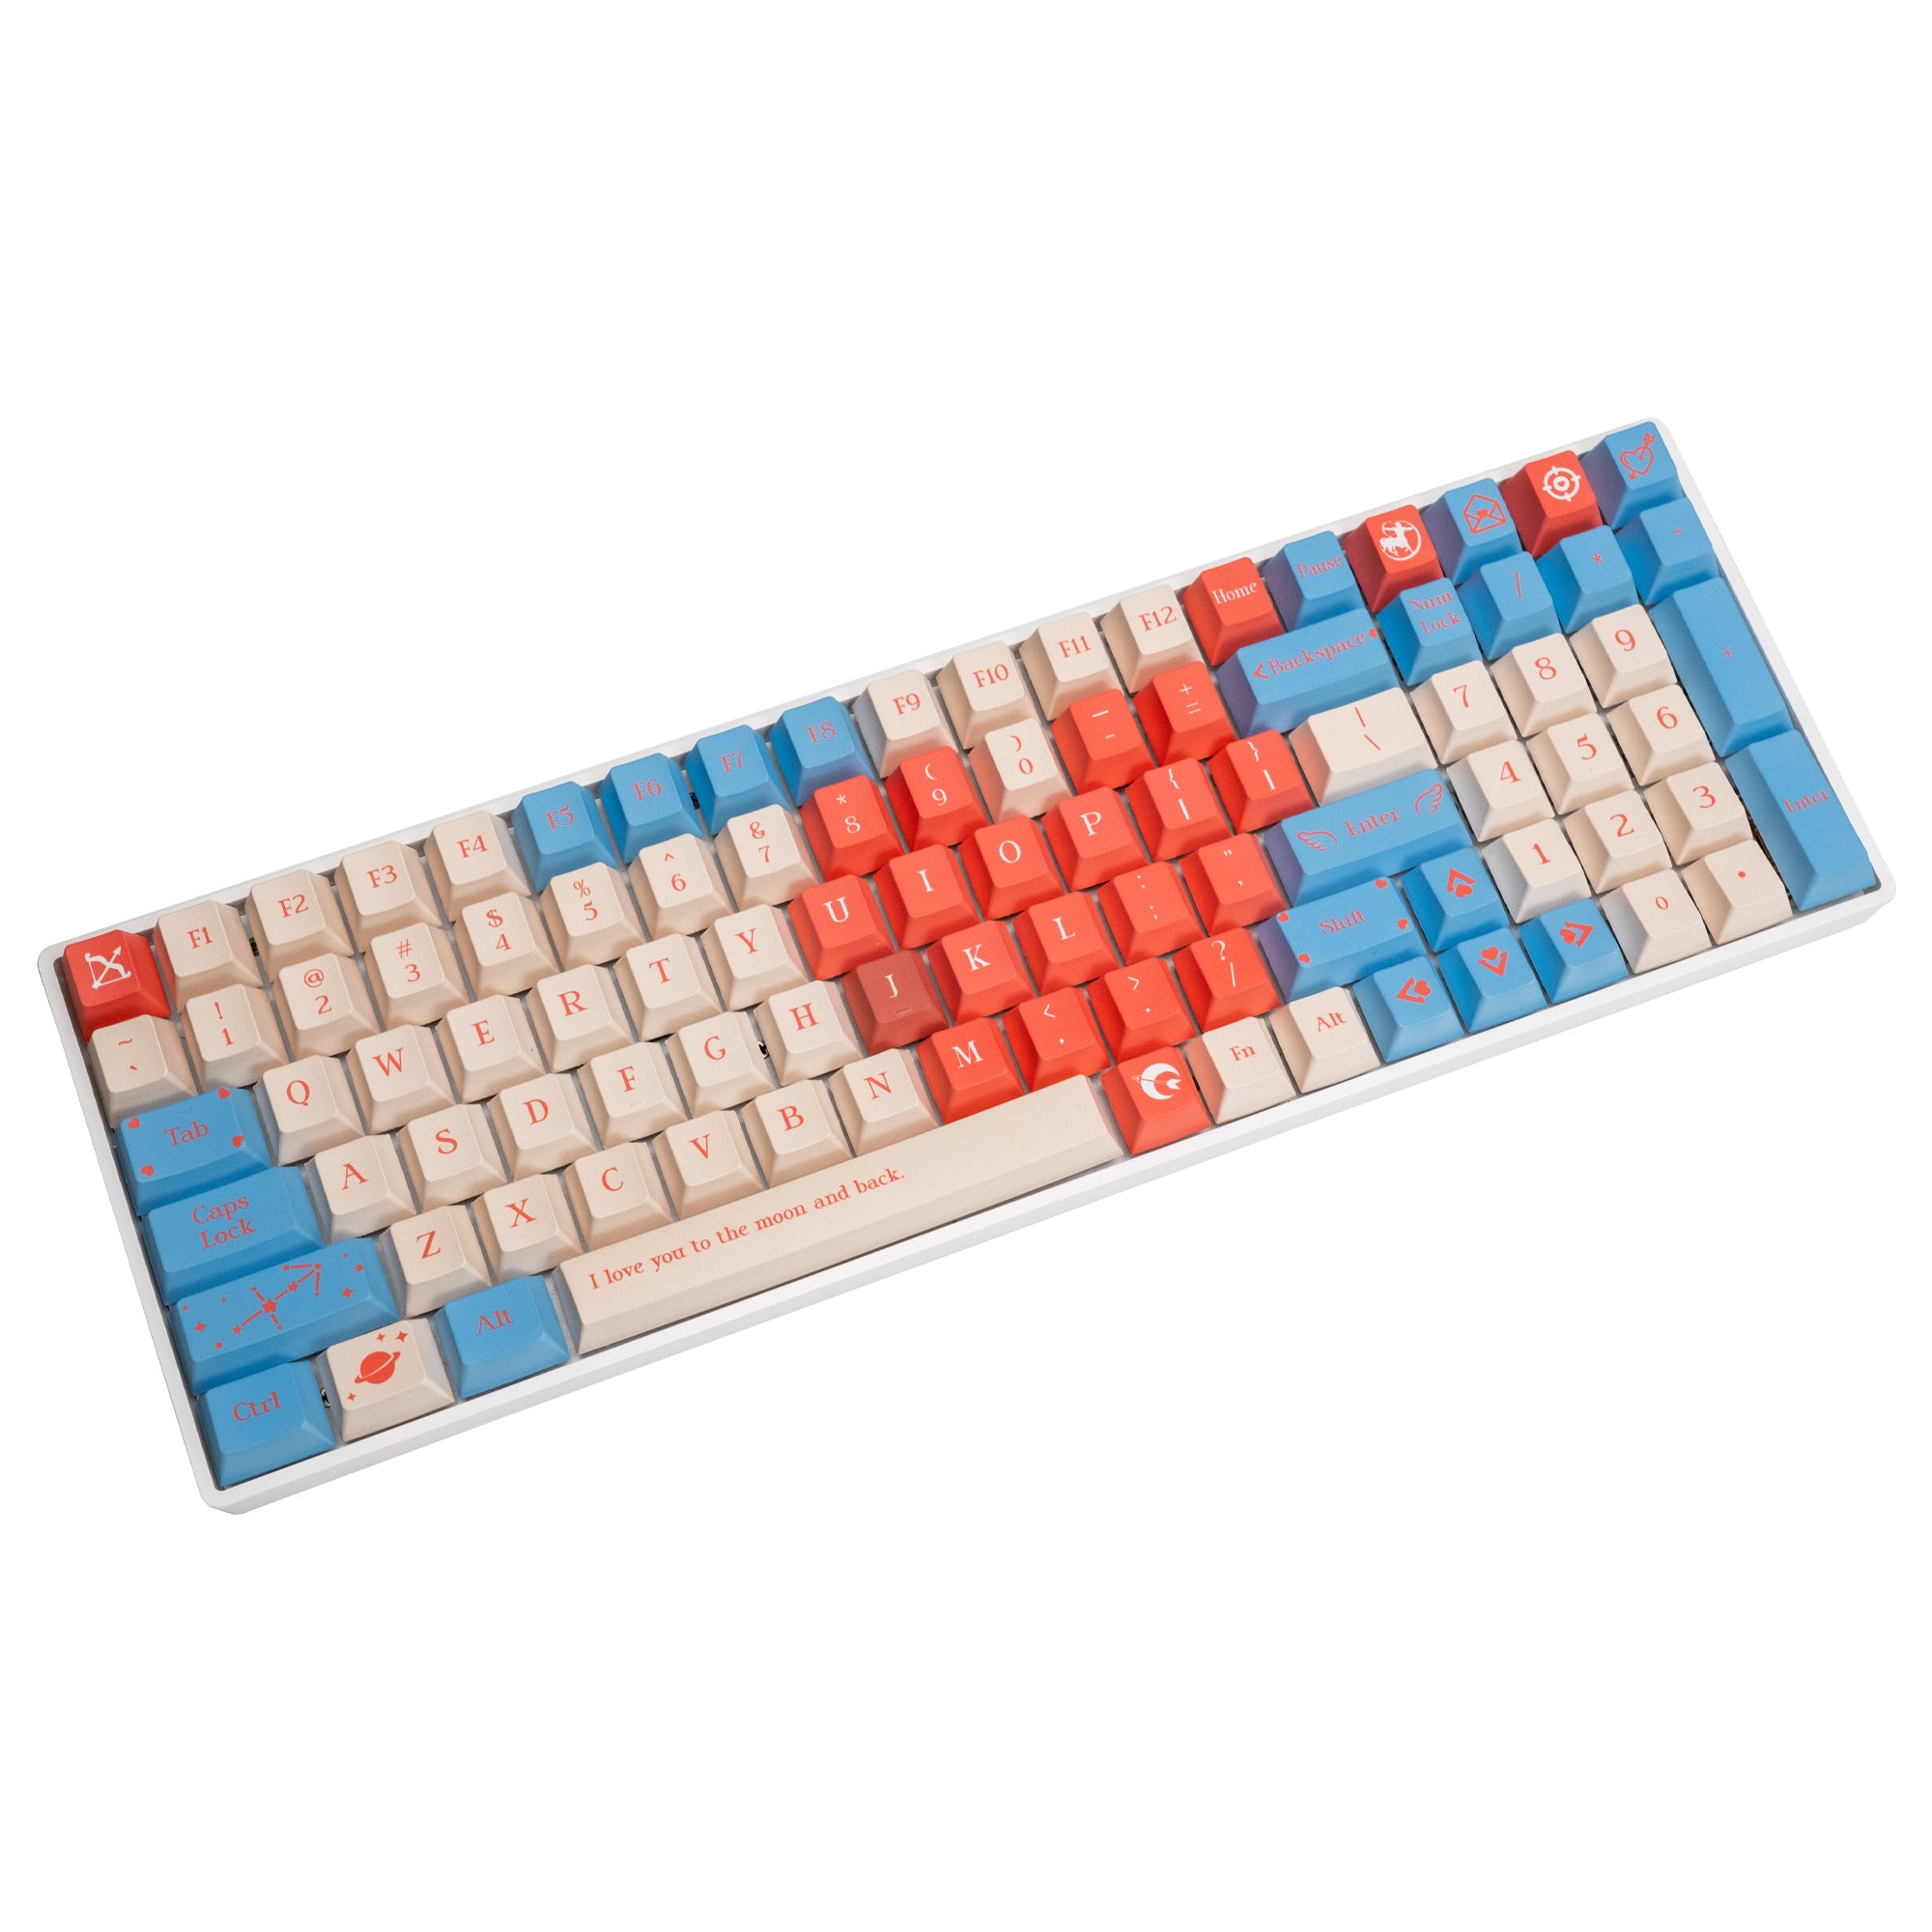 customize-keycaps-Sagittarius-blue-constellation-series-pbt-mechanical-keyboard-keycaps-set